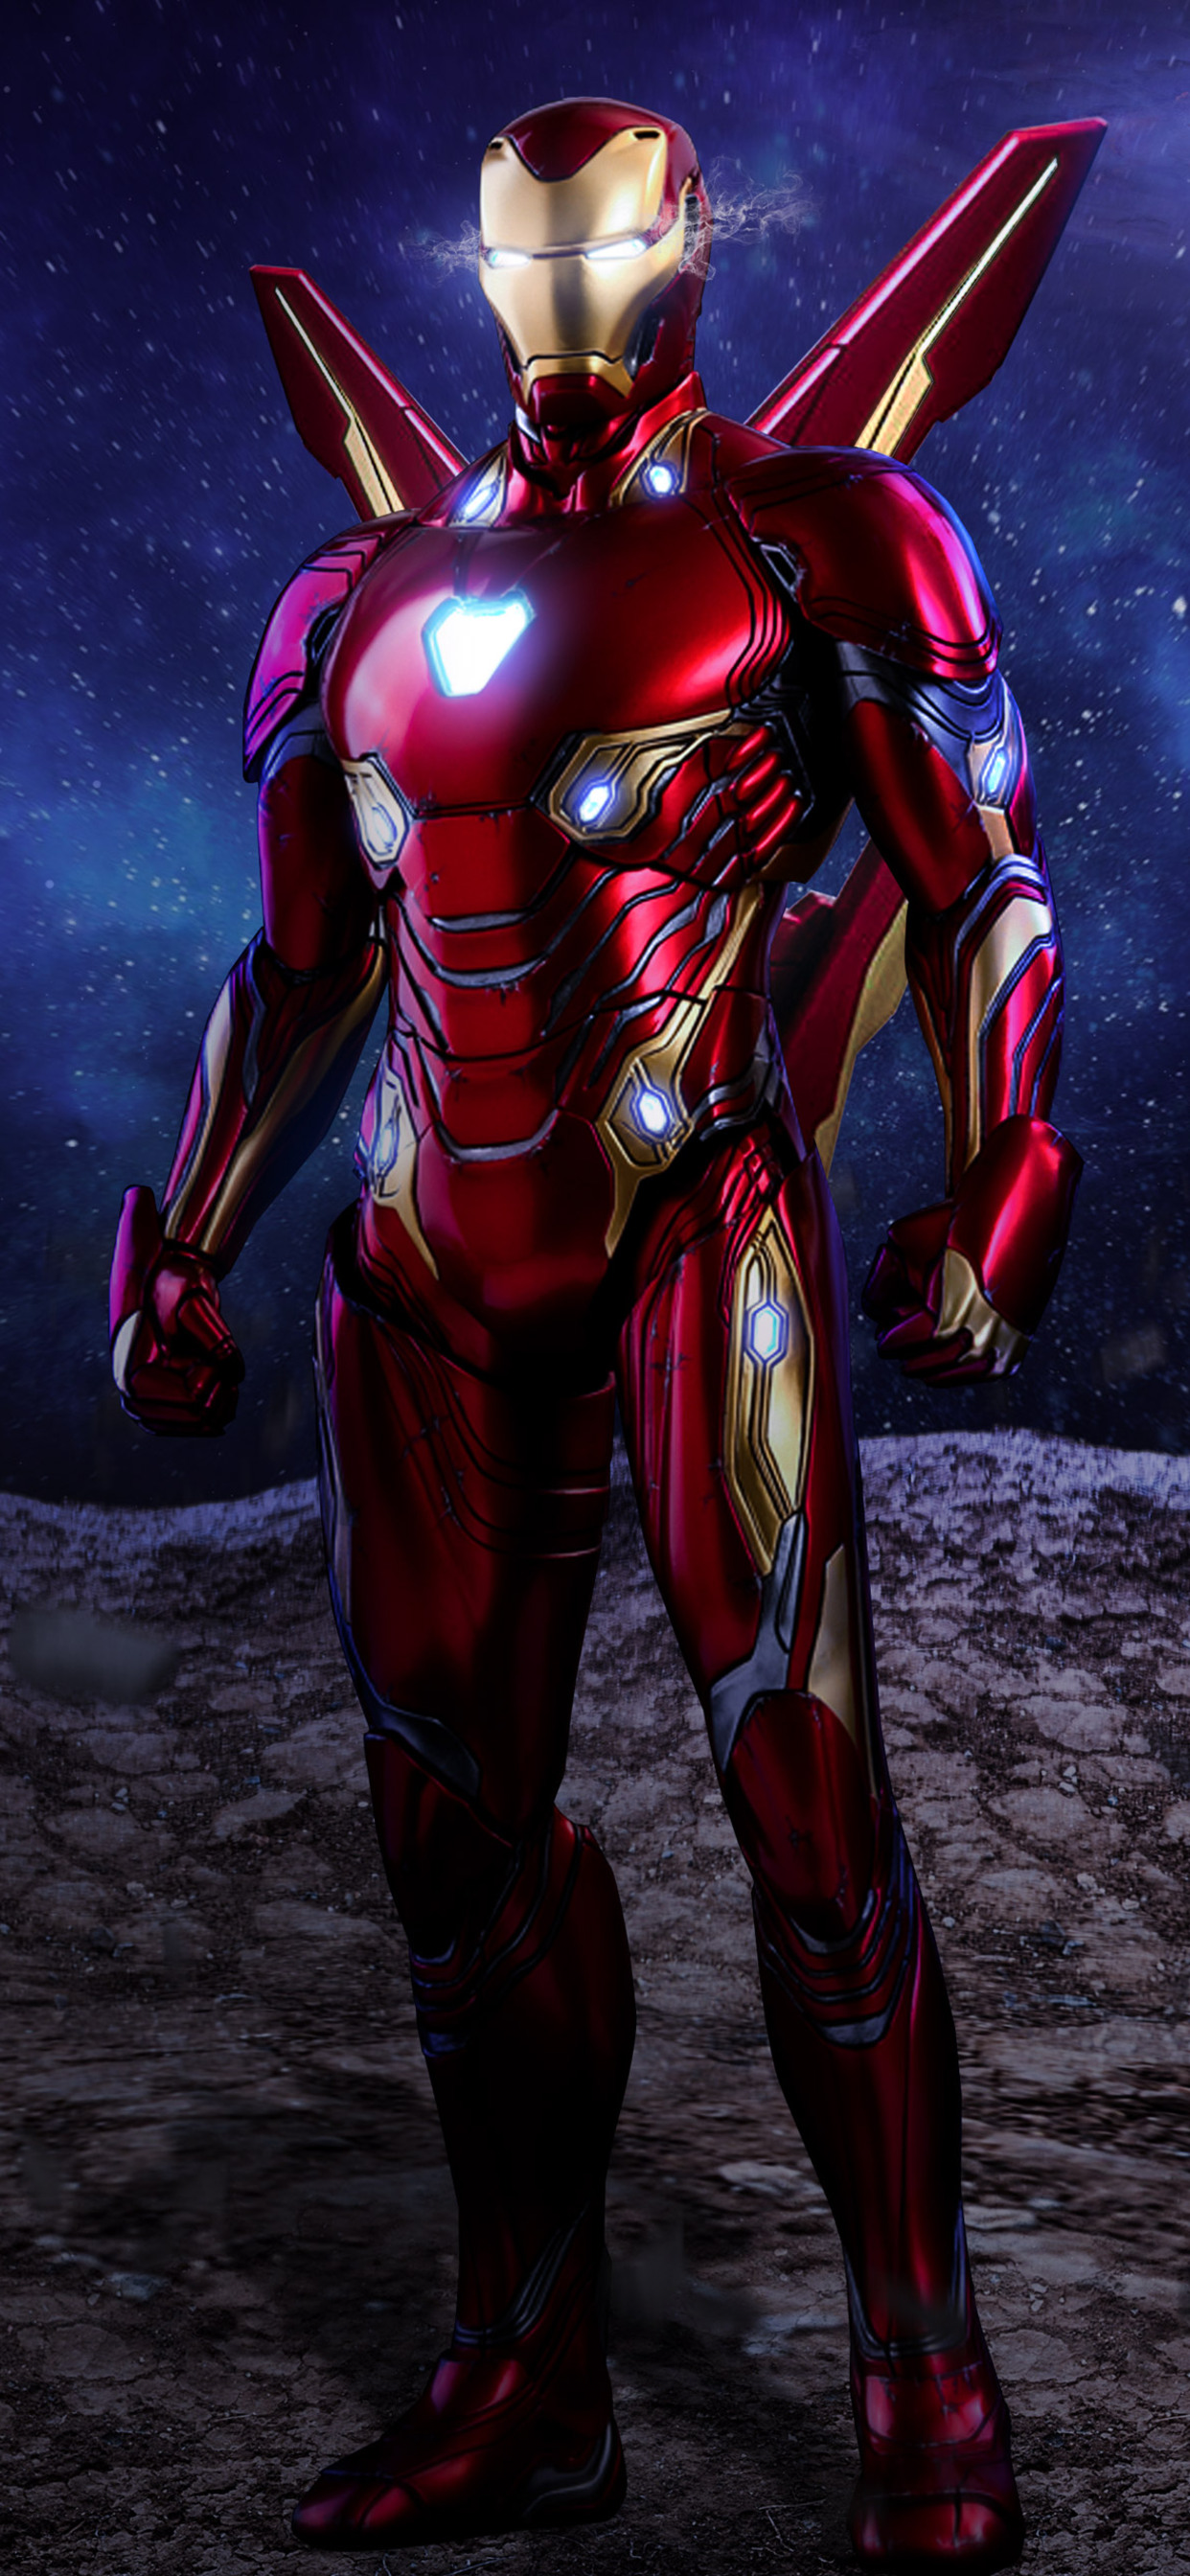 1242x2688 Iron Man Avengers Infinity War Suit Artwork Iphone XS MAX HD